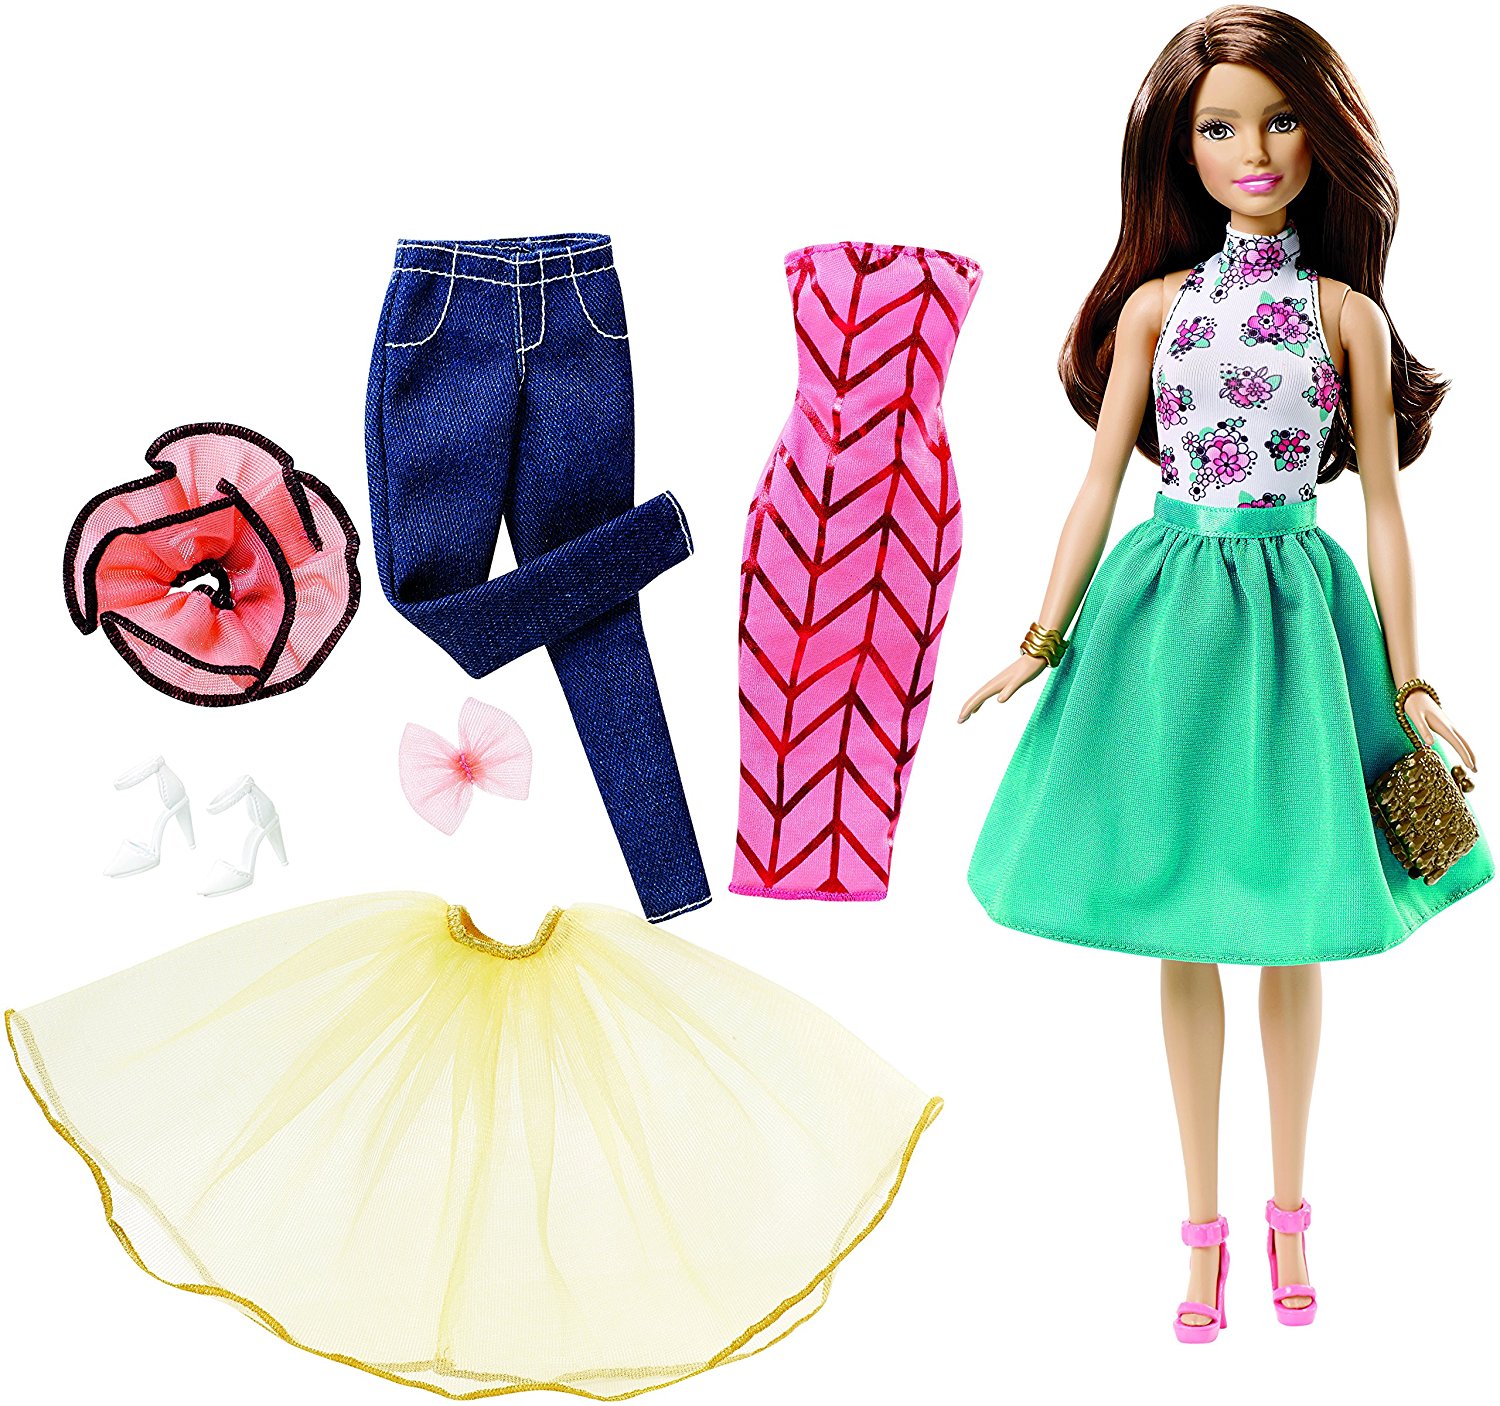 Amazon.com: Barbie Fashion Mix 'N Match Doll, Brunette: Toys & Games